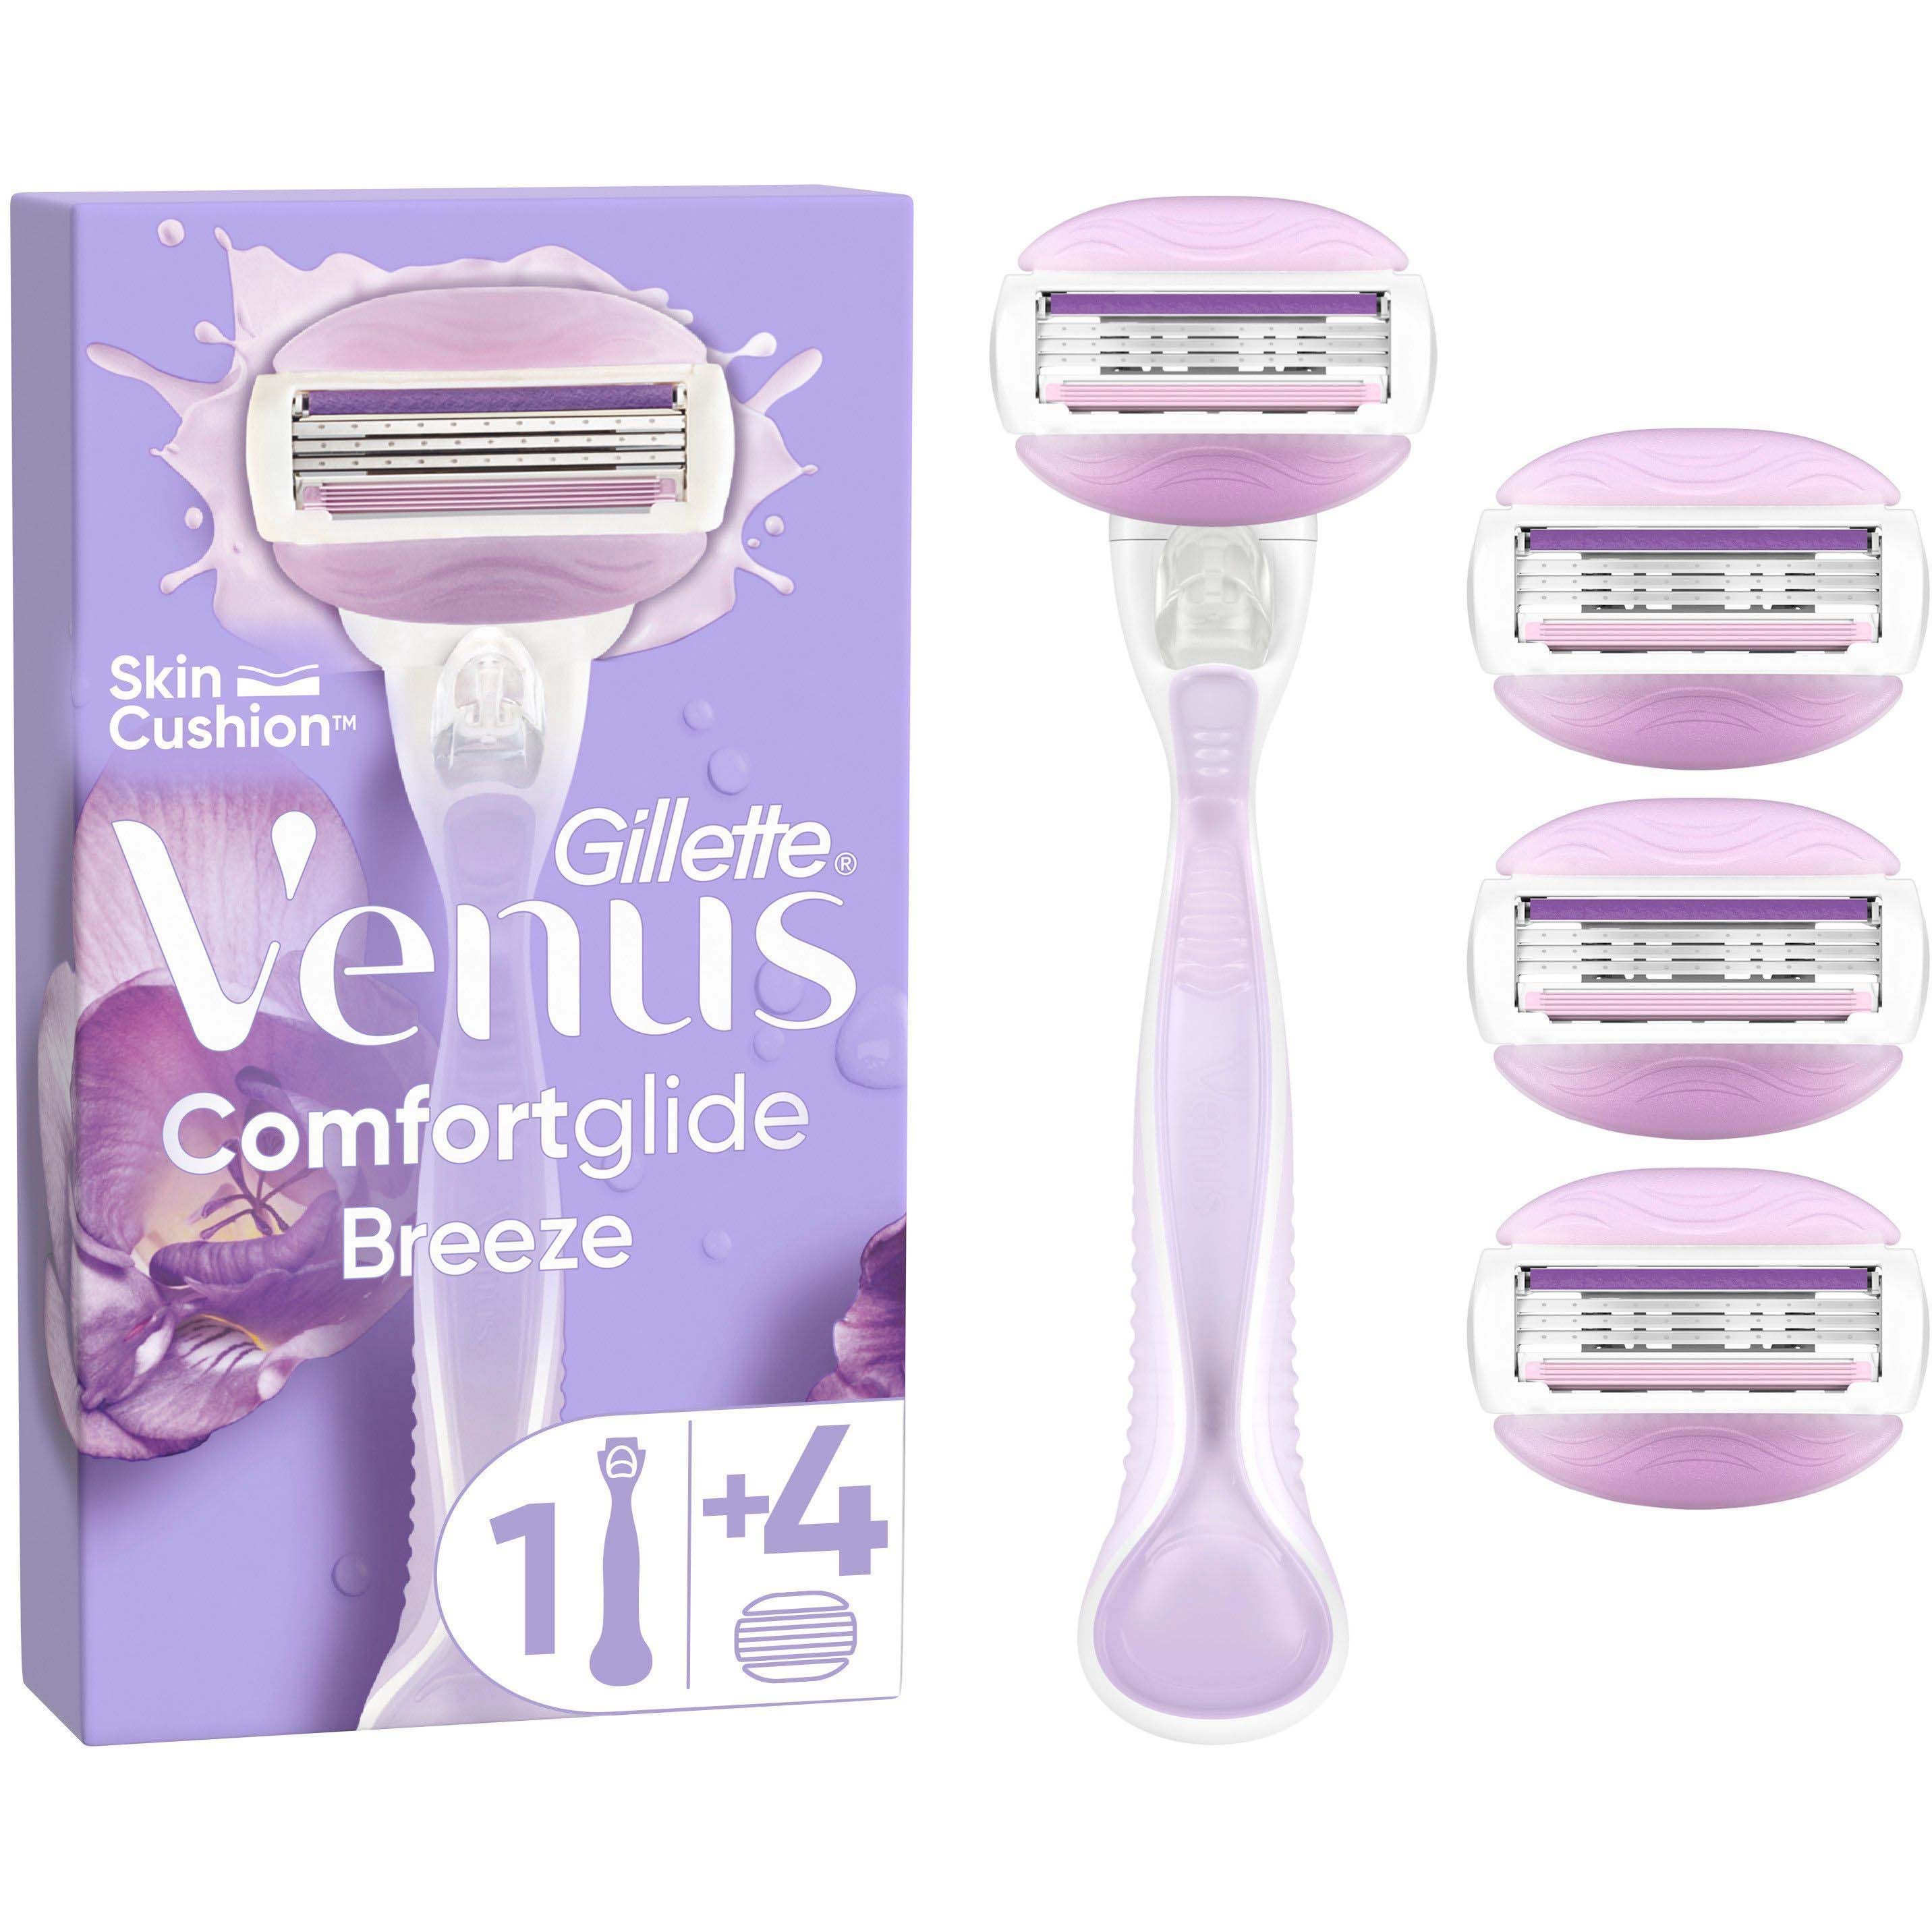 Gillette Venus Comfortglide Breeze razor 4 razor blade refills